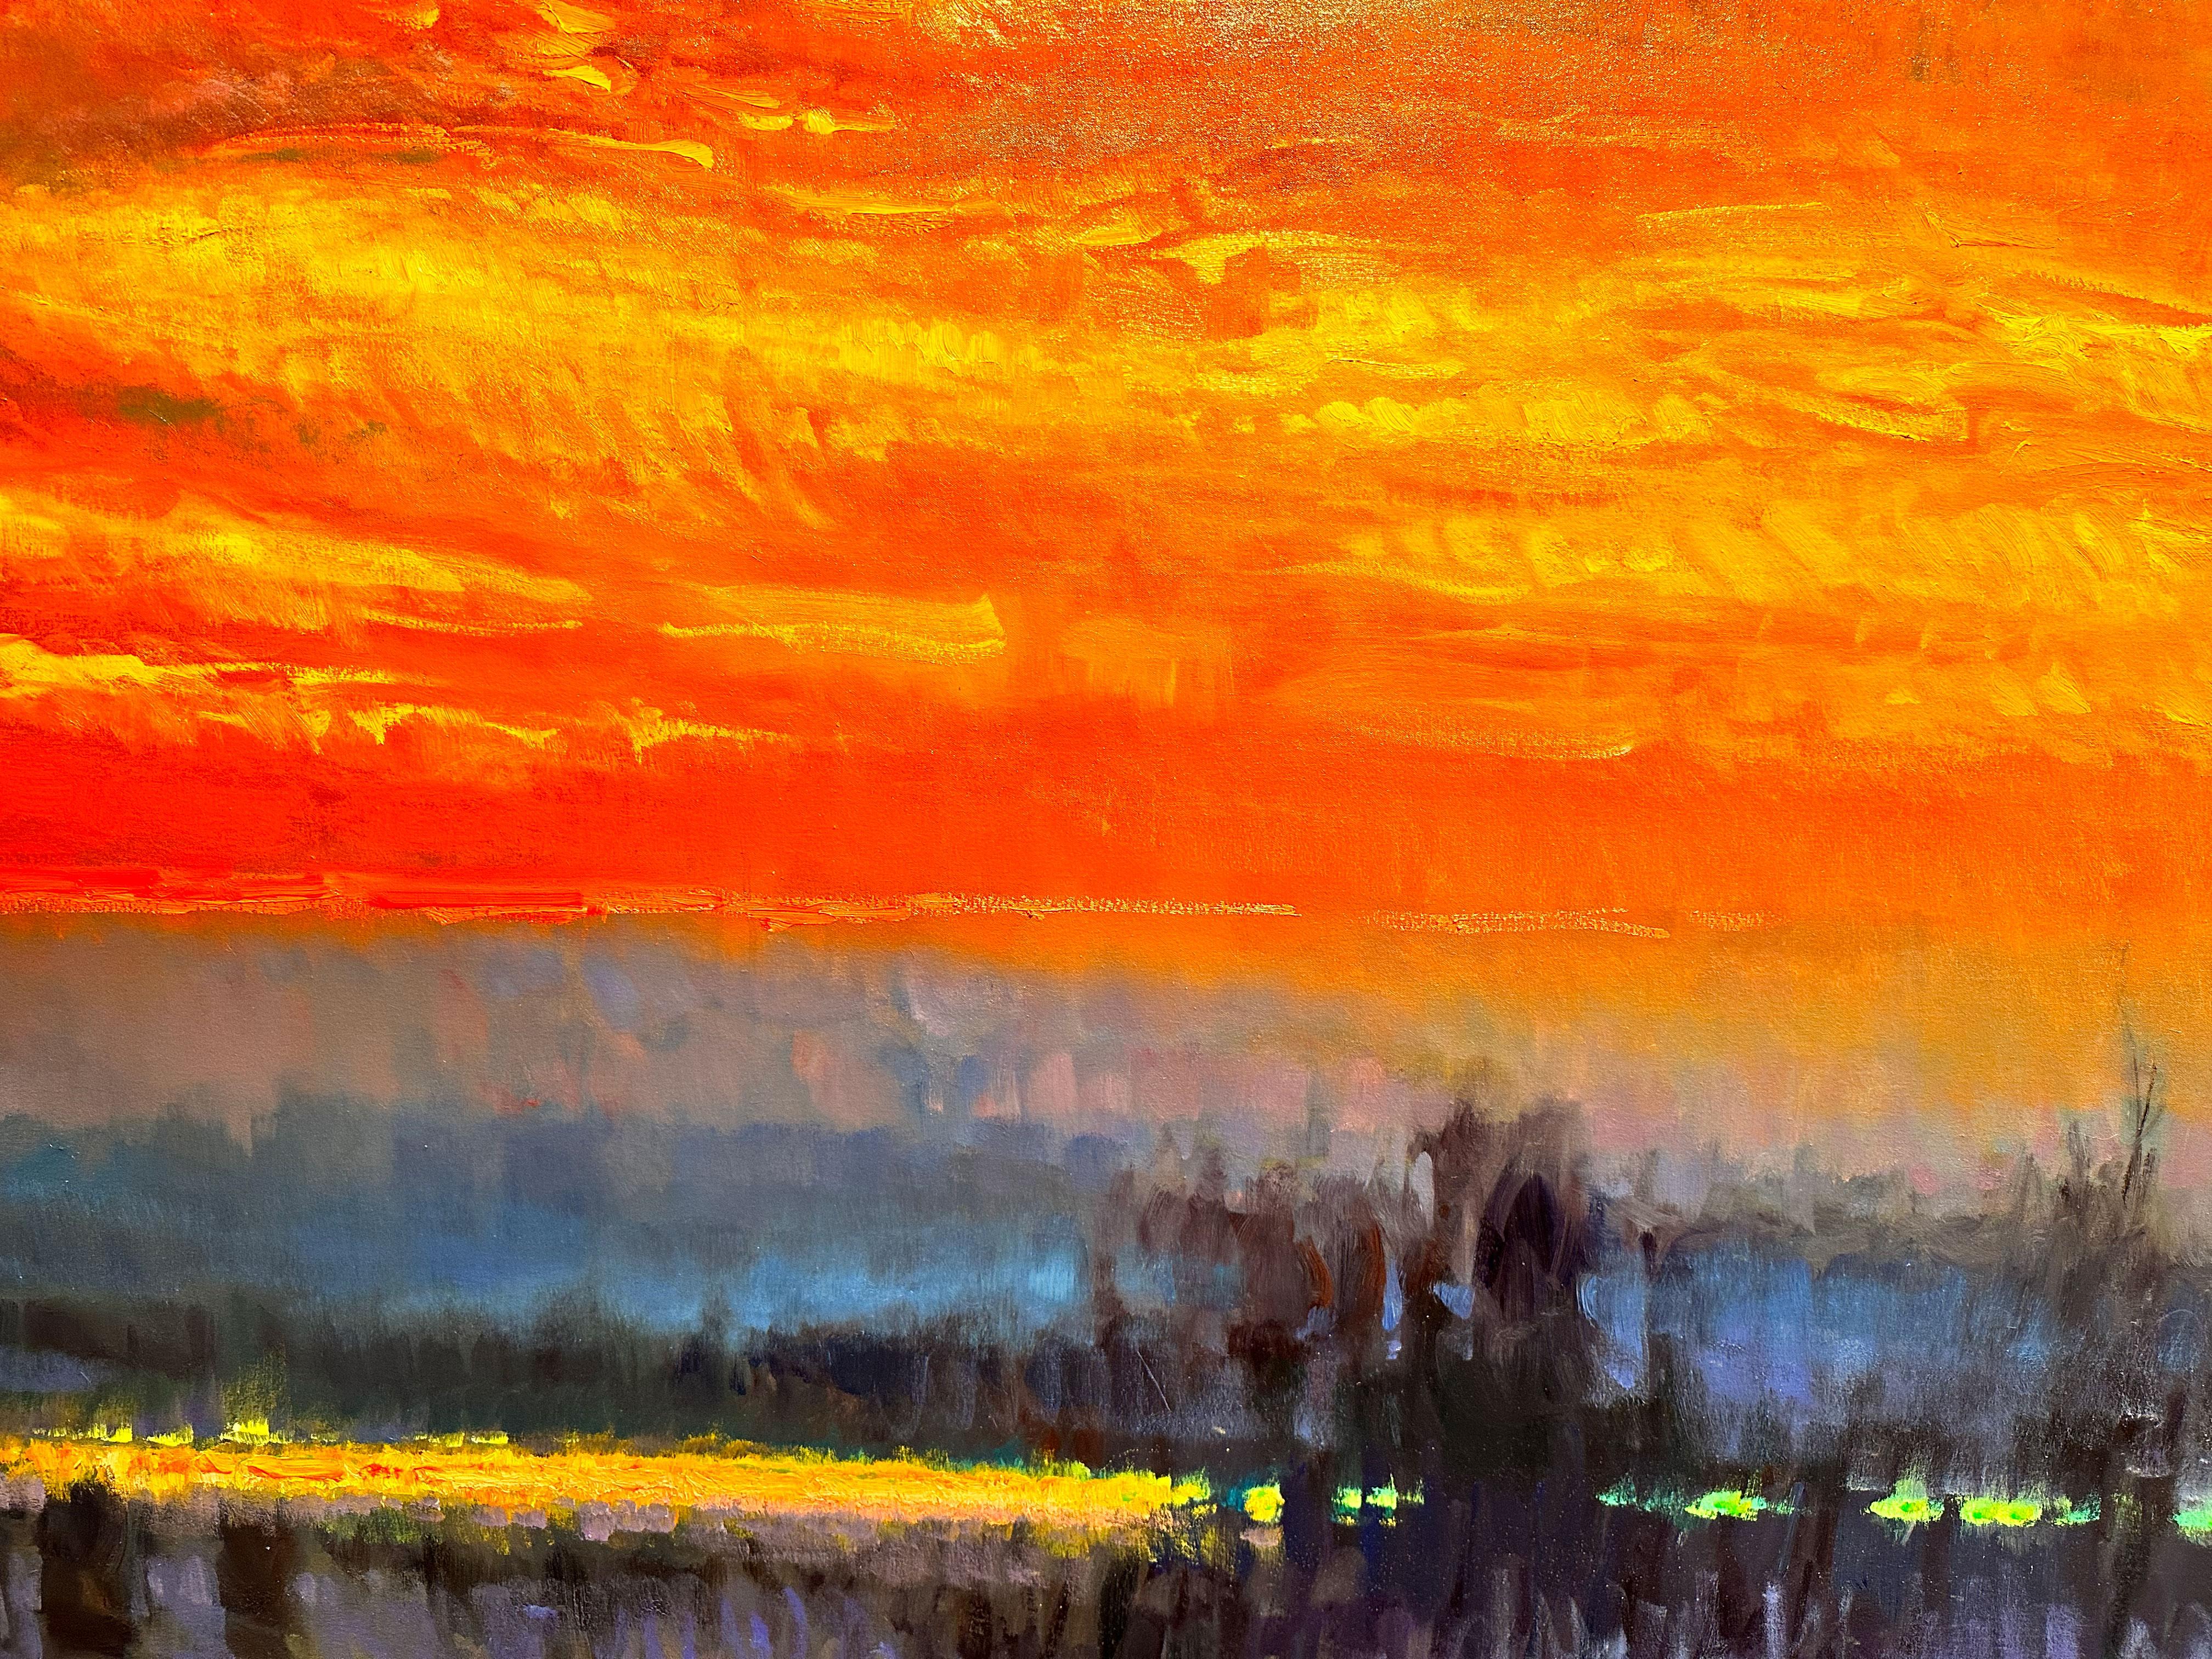 « Grand Illumination », Don Sahli, 60x70, paysage à l'huile impressionniste original en vente 4